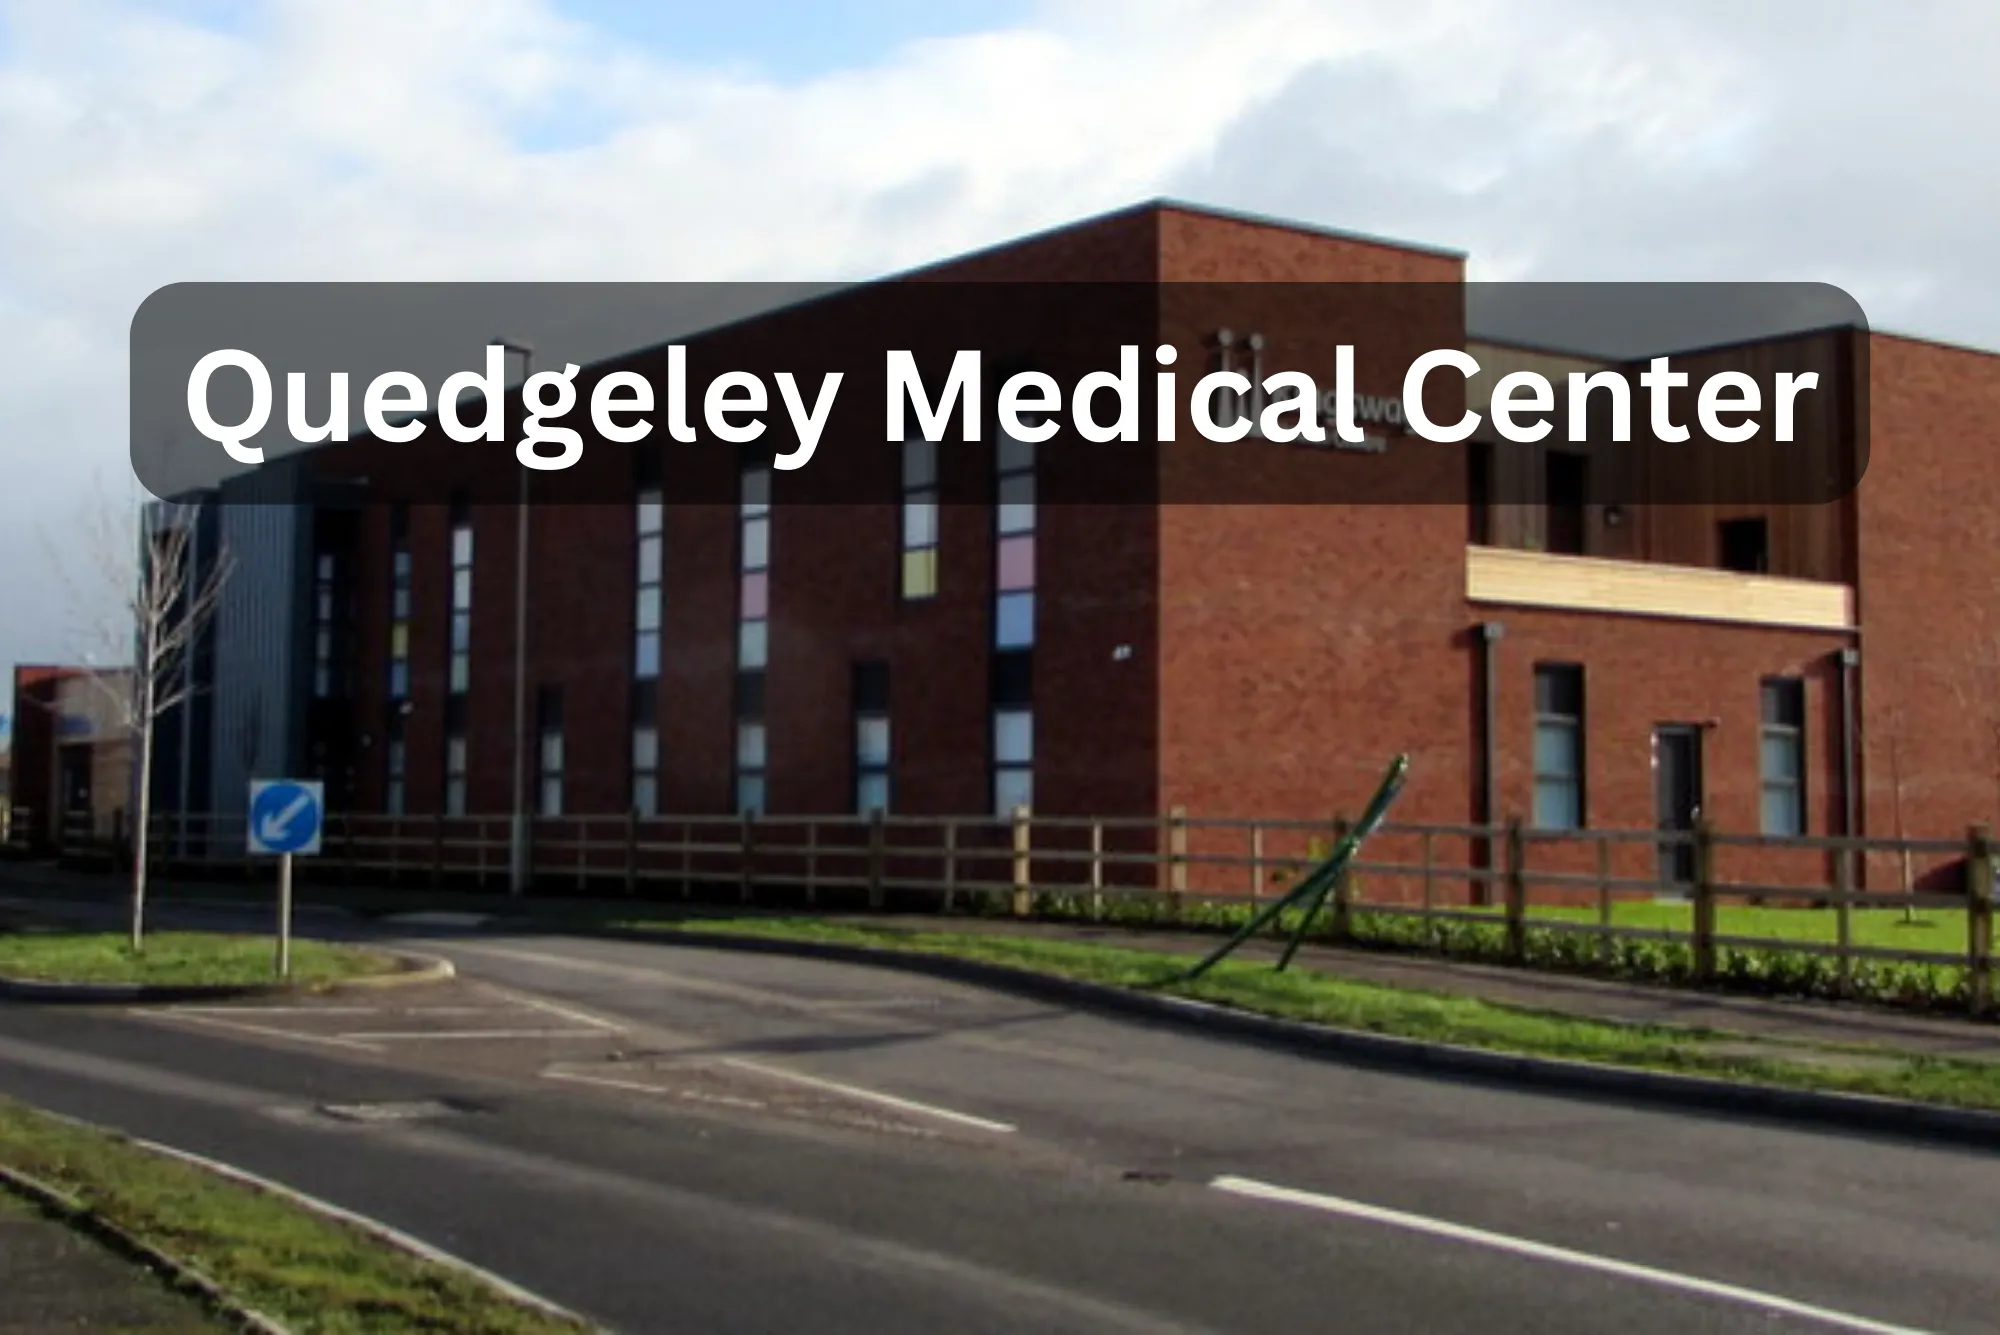 Quedgeley Medical Center